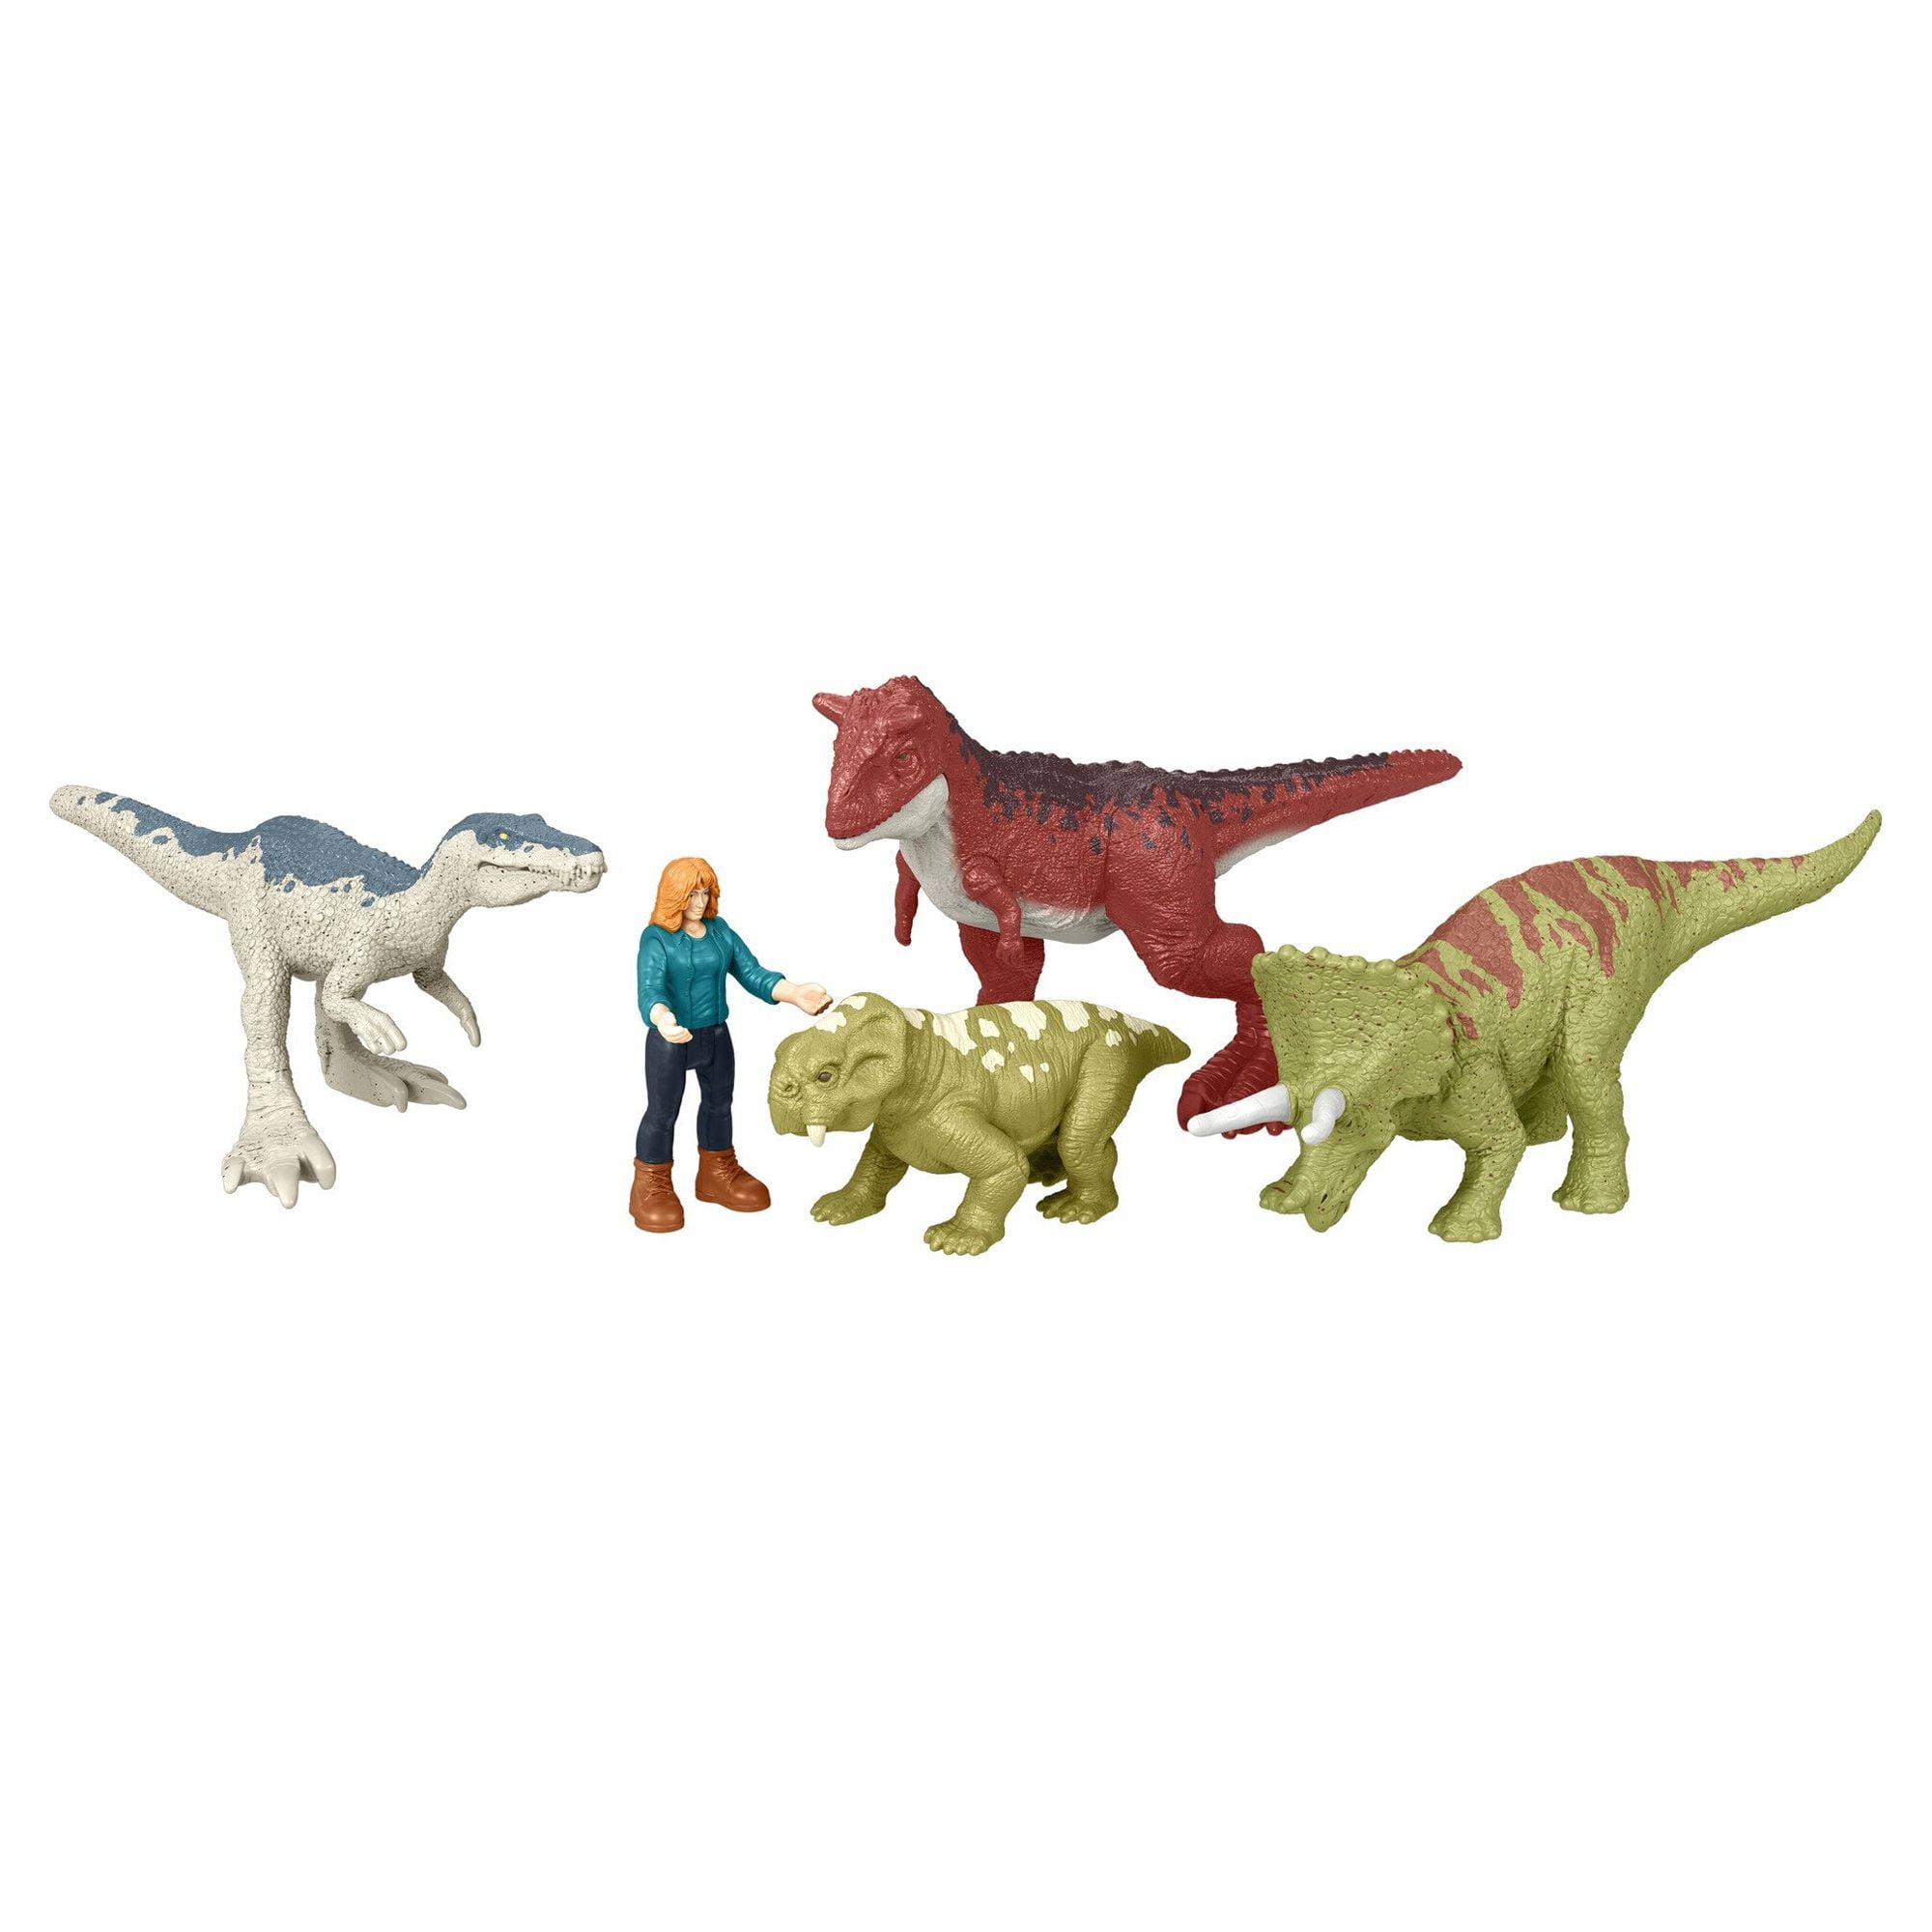 Mini Game, Dinosaur Battle (anos 90)